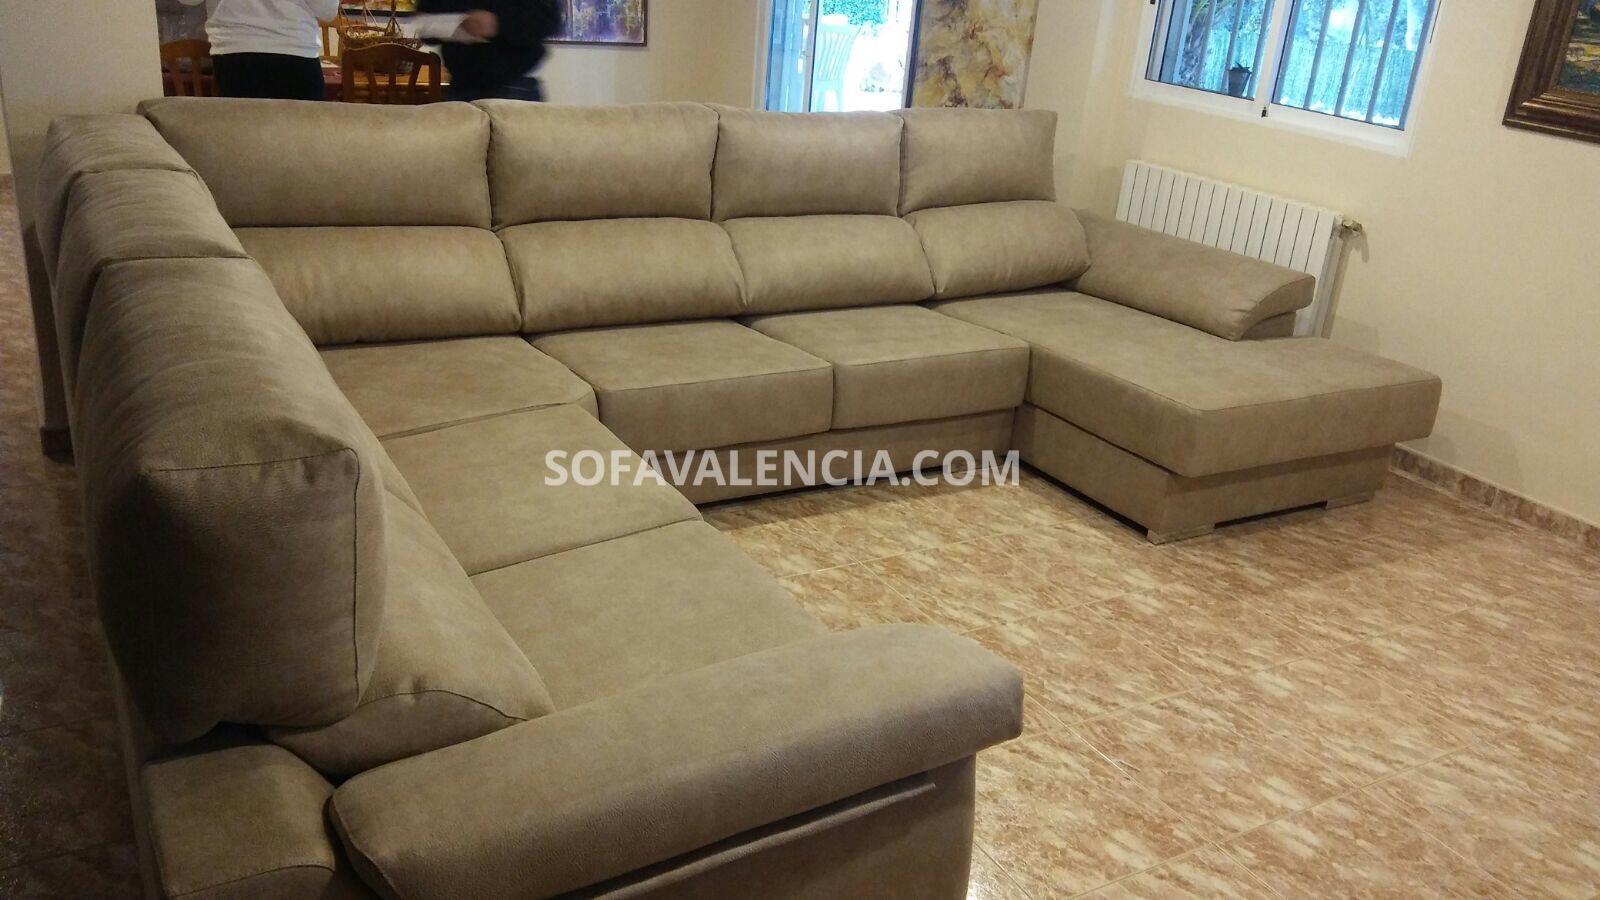 sofa-valencia-fotos-clientes-8